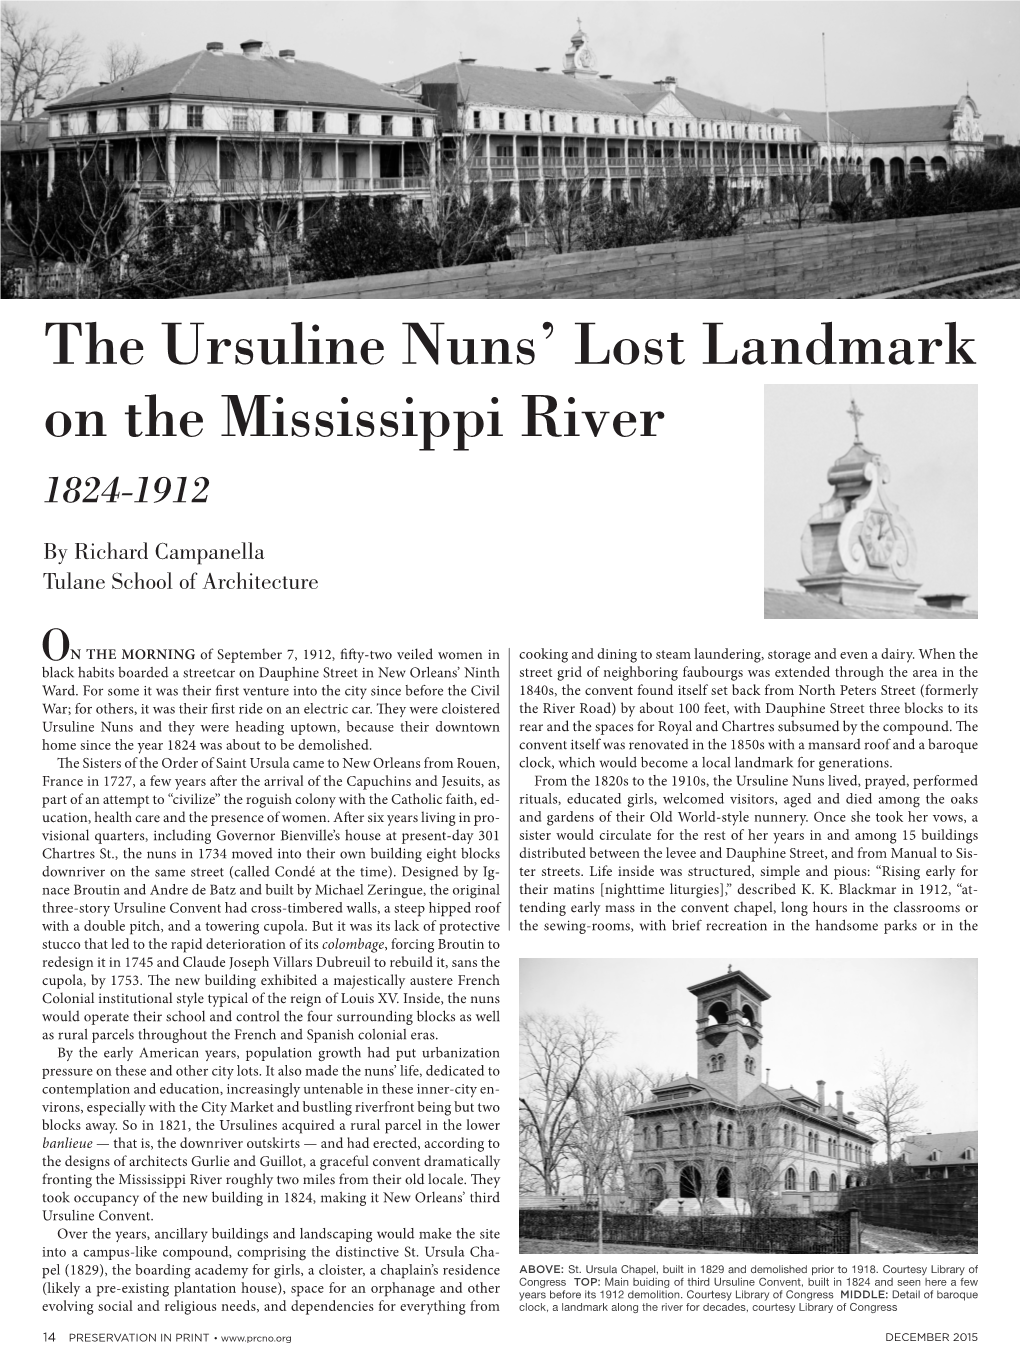 The Ursuline Nuns' Lost Landmark on the Mississippi River